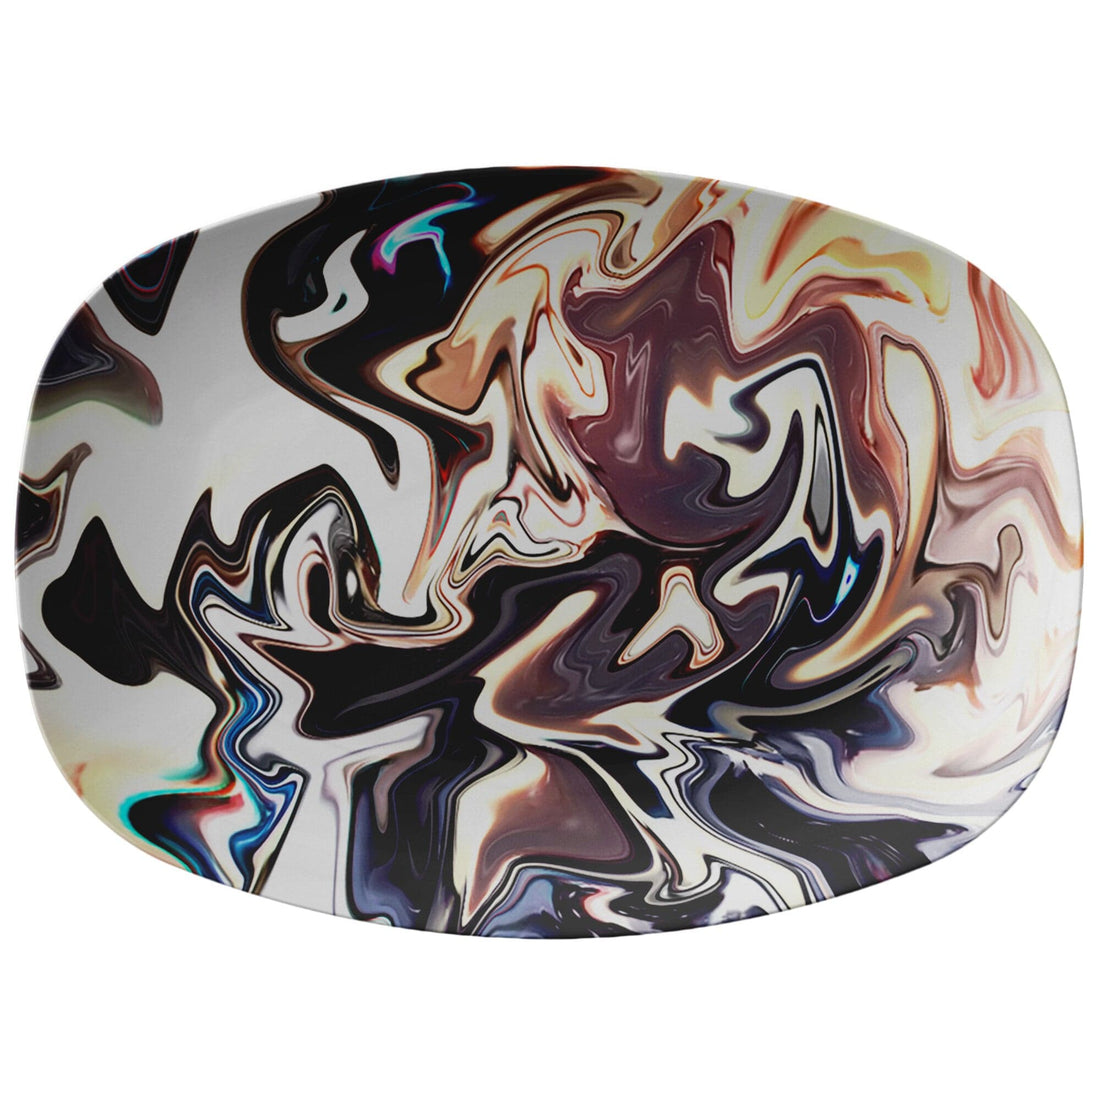 Kate McEnroe New York Serving Platter in Abstract Liquid Marble PrintServing Platters9727